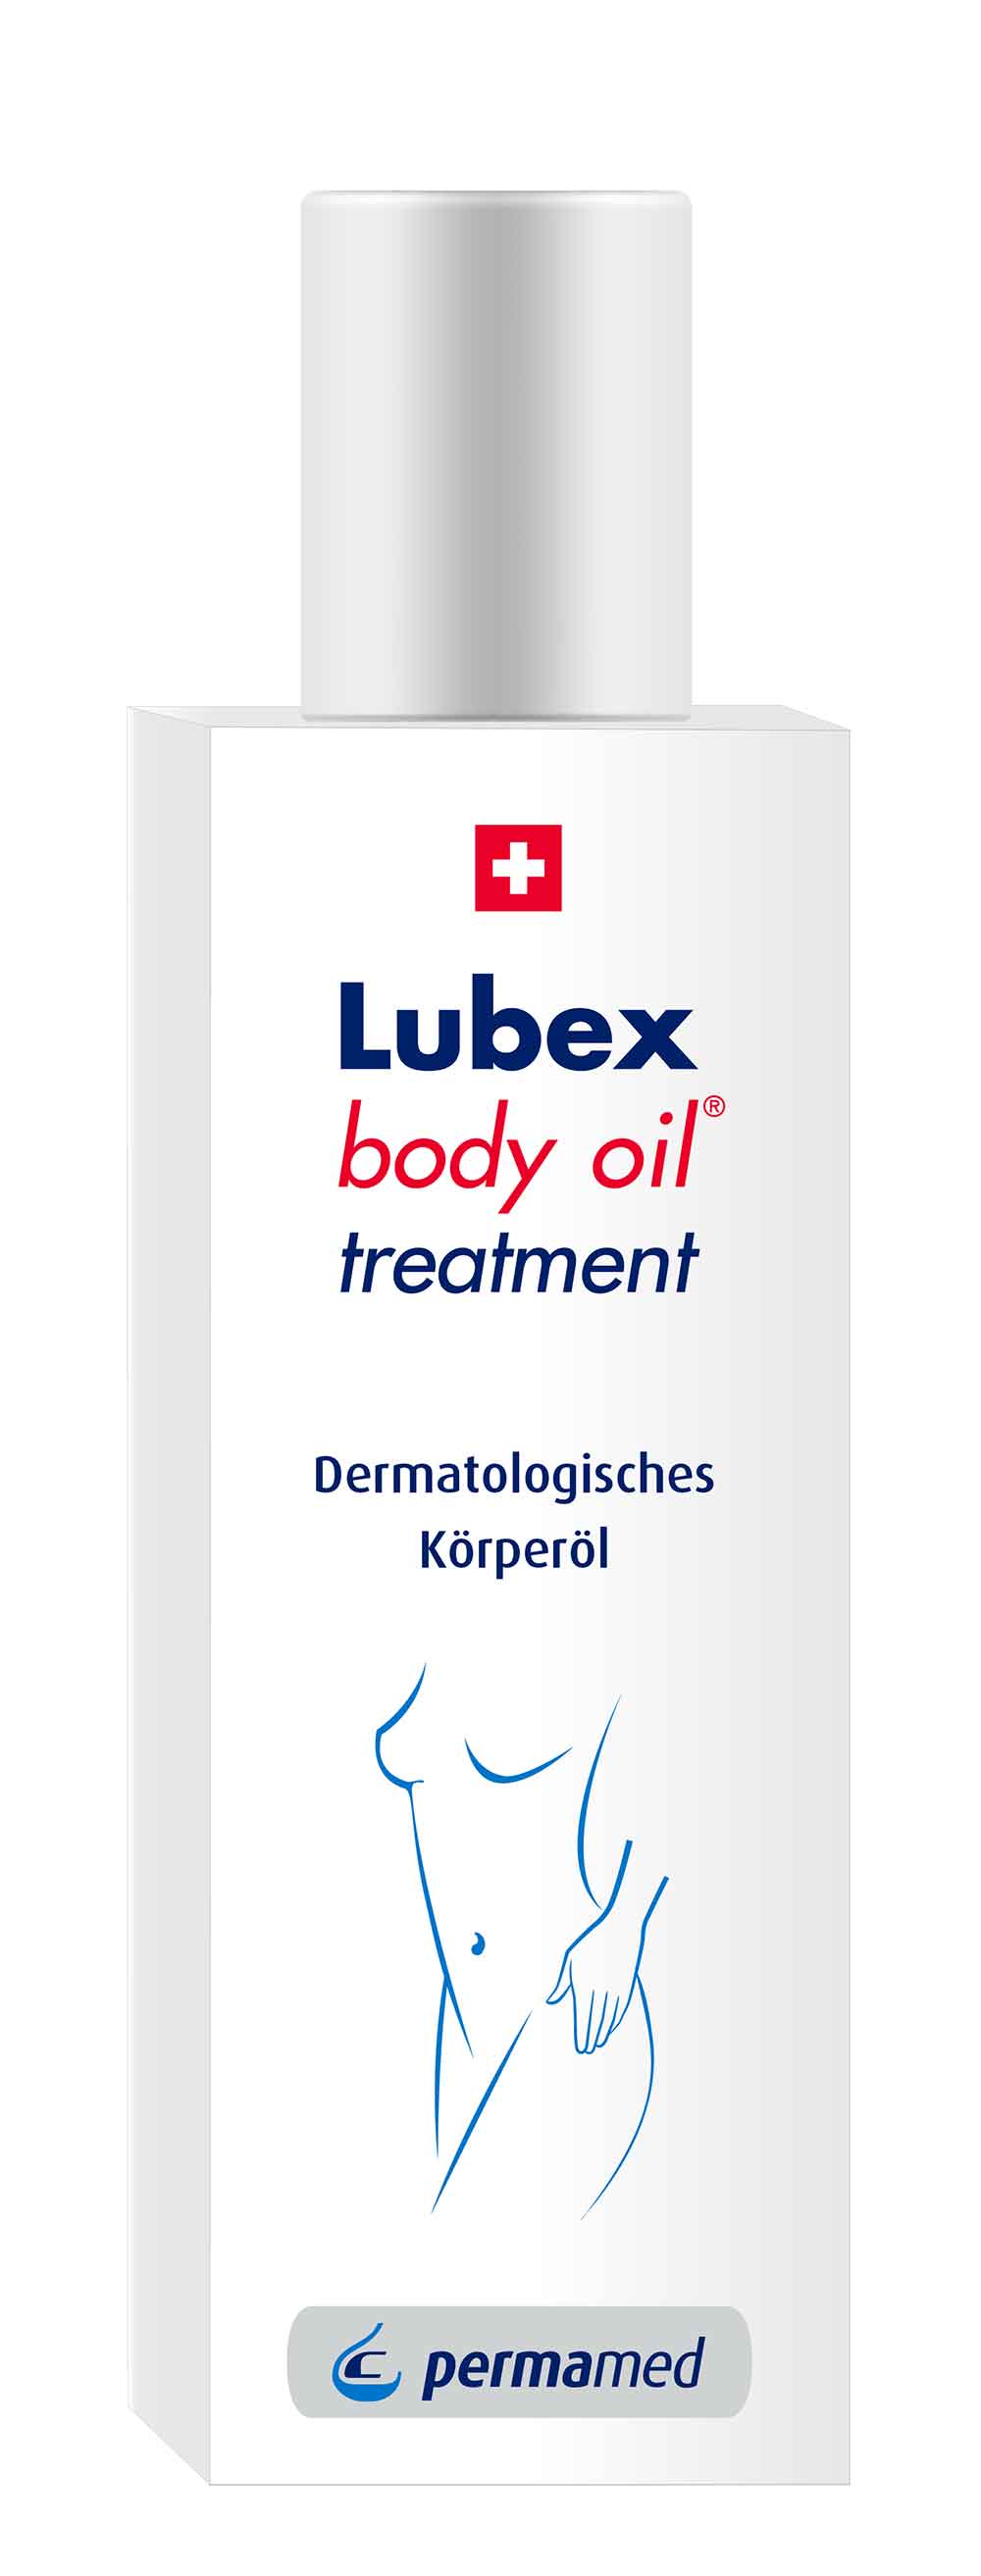 Lubex Body oil treatment